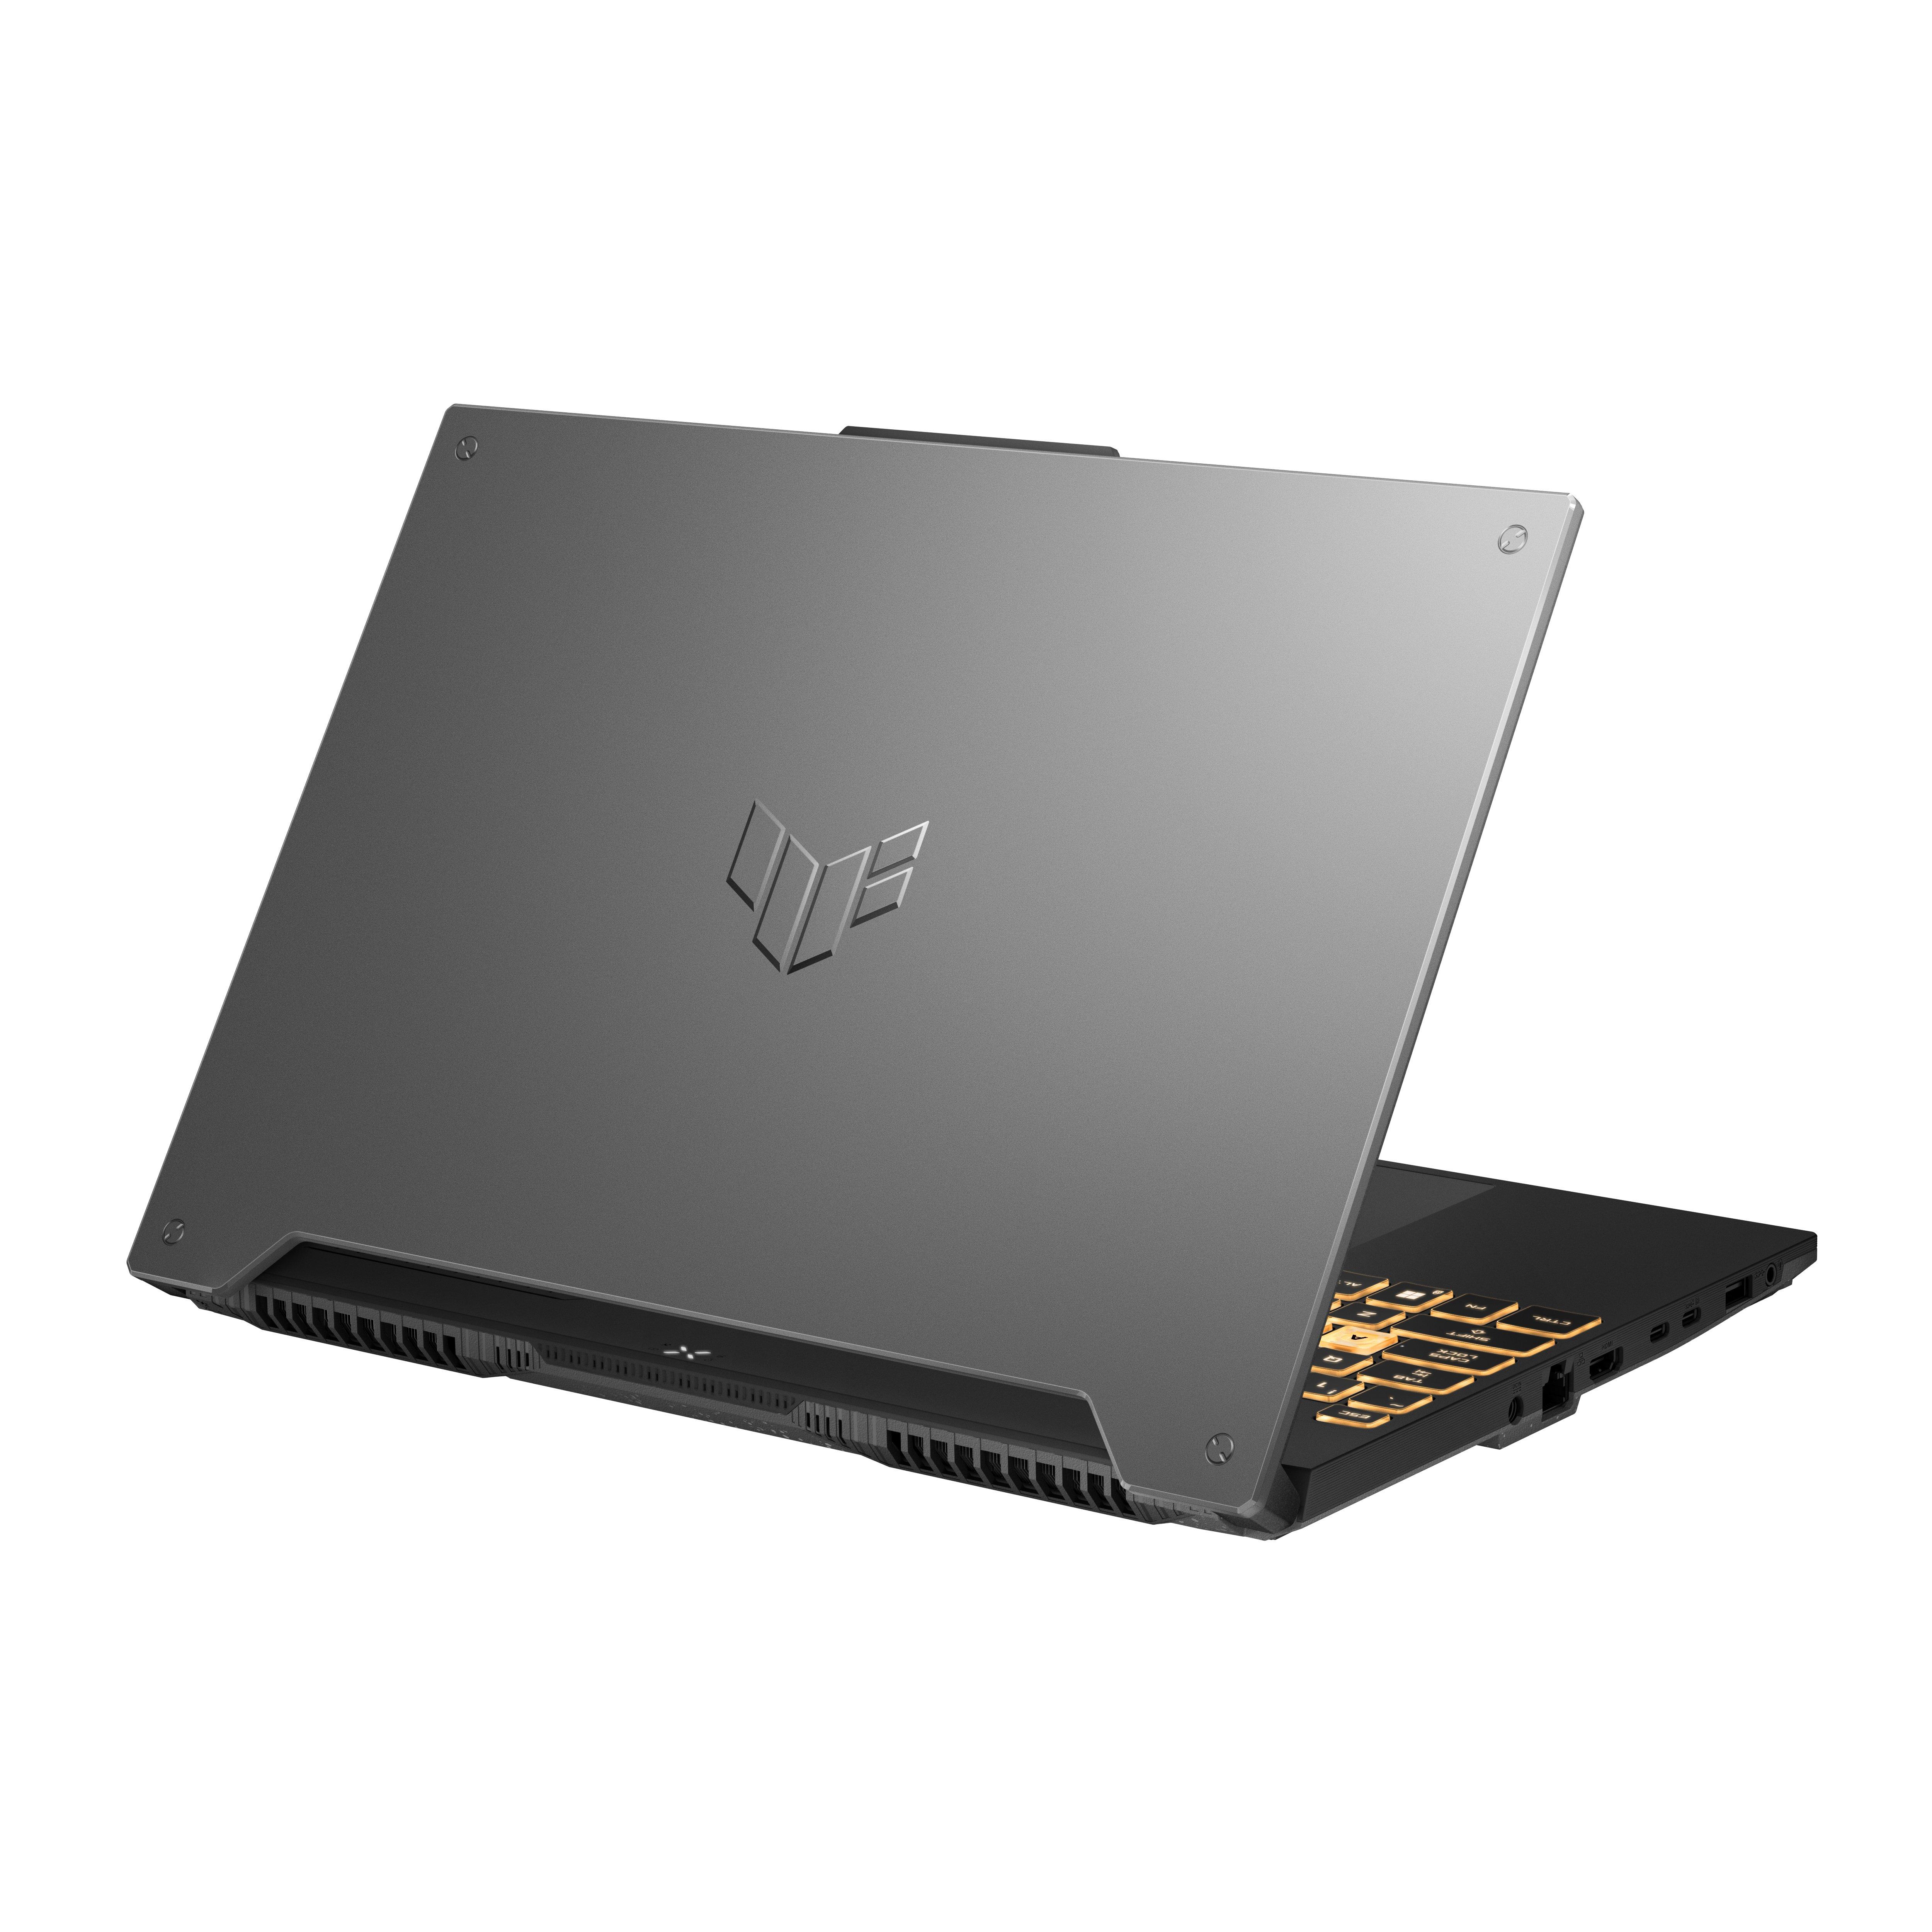 ASUS TUF F15 Gaming Laptop 144Hz FHD IPS Display Intel Core i7-12700H NVIDIA GeForce RTX 3060 16GB DDR5 512GB SSD | GameStop